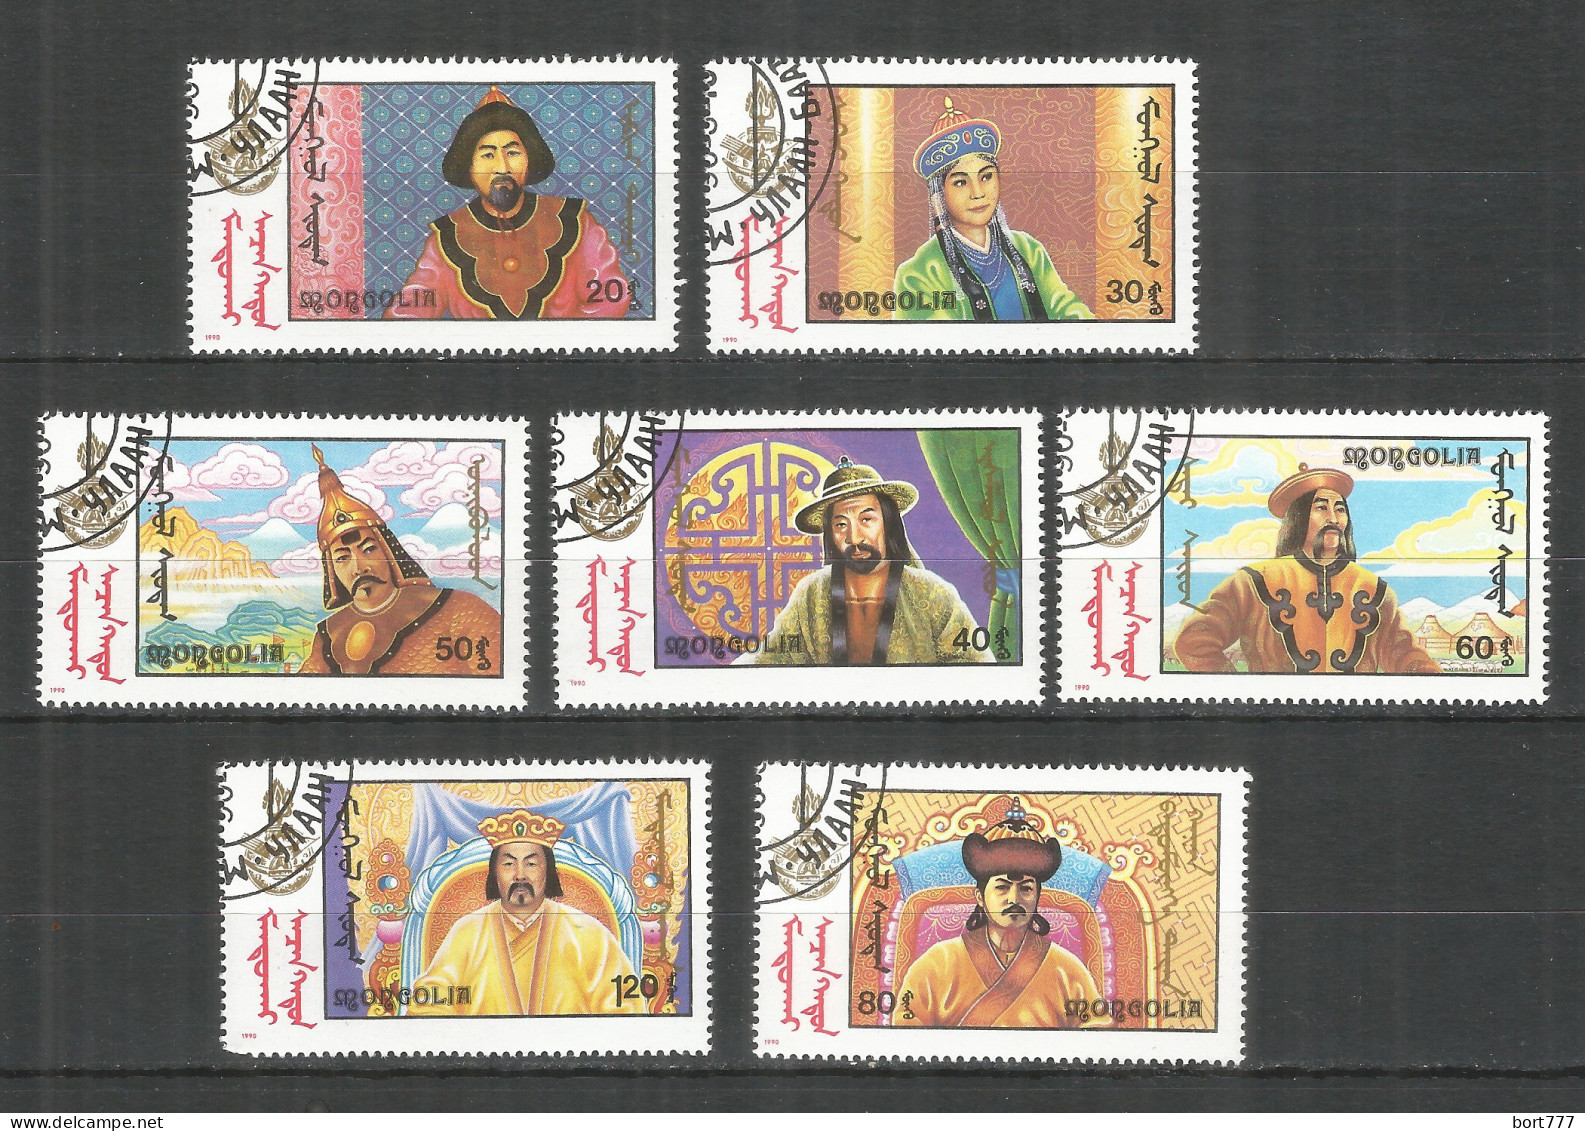 Mongolia 1990 Used Stamps CTO  - Mongolia